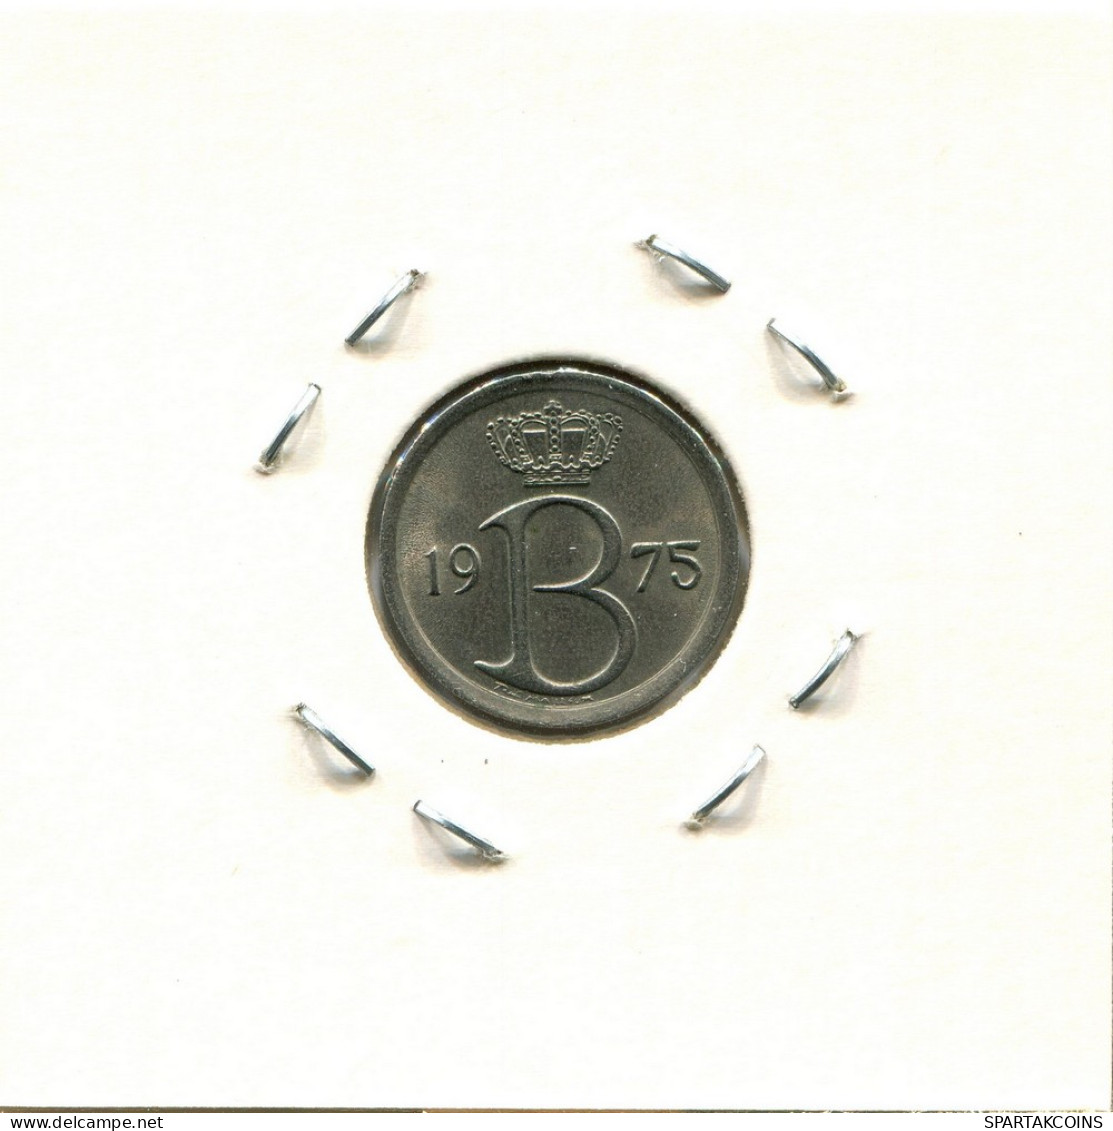 25 CENTIMES 1975 DUTCH Text BELGIUM Coin #BA343.U - 25 Cents